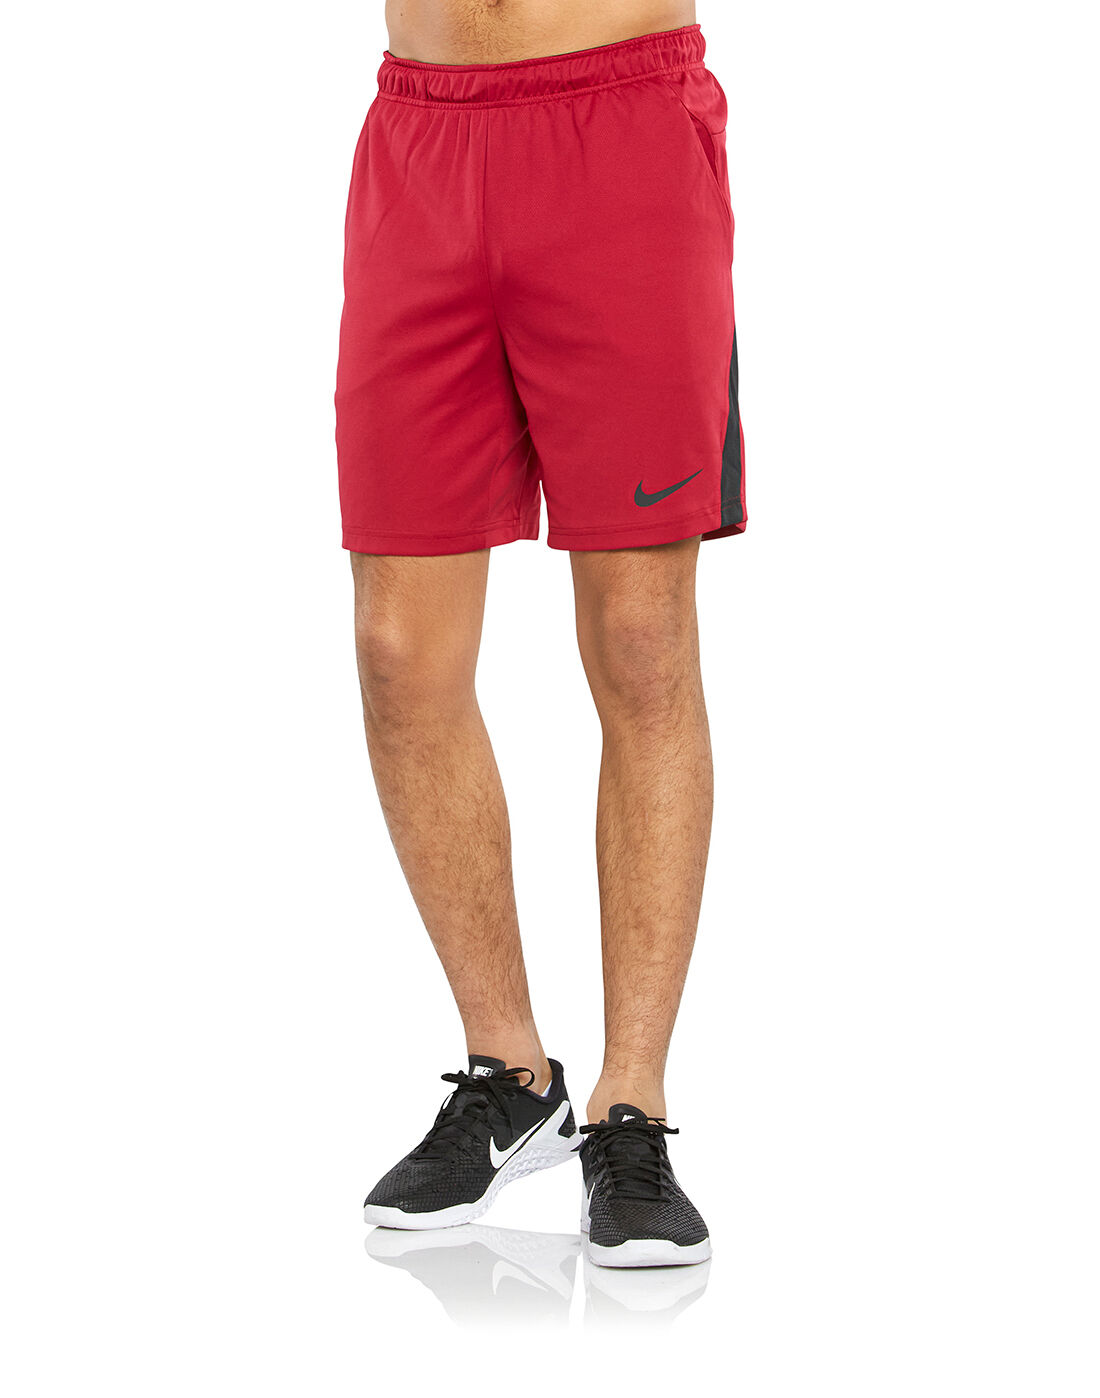 Nike Mens Dry 5.0 Short - Red | Life 